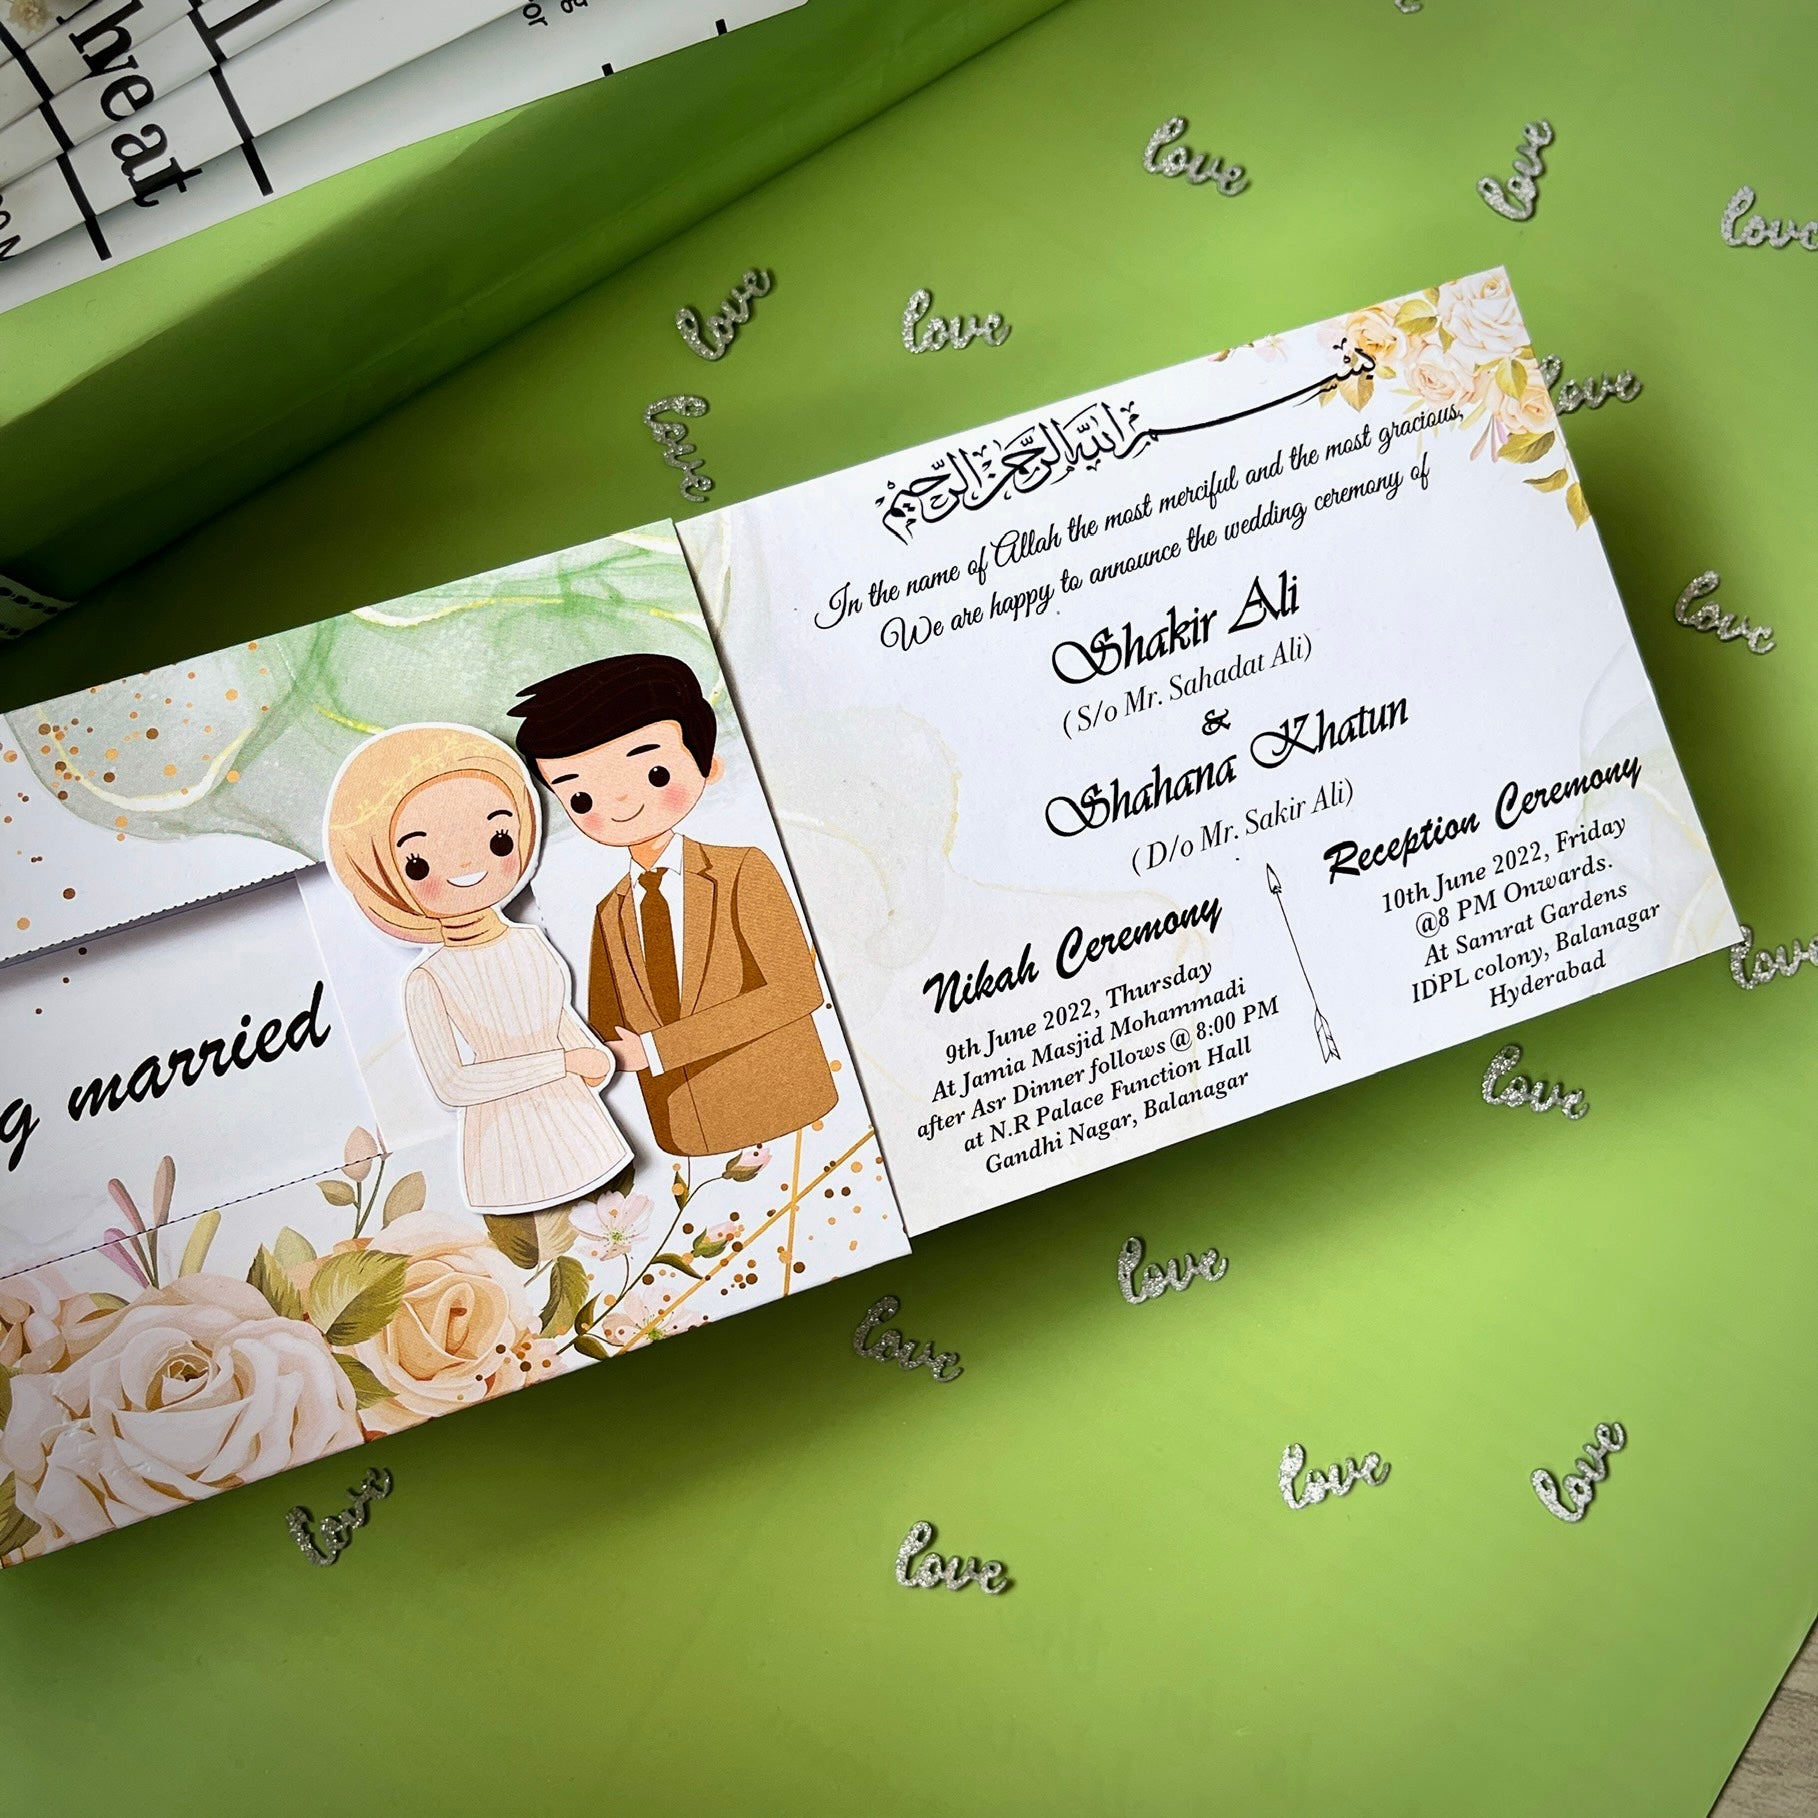 Suit-Gown Wedding Invitation / Sliding wedding cards / Sliding invites /  Customised Invitation, Sliding cards (25 pcs)